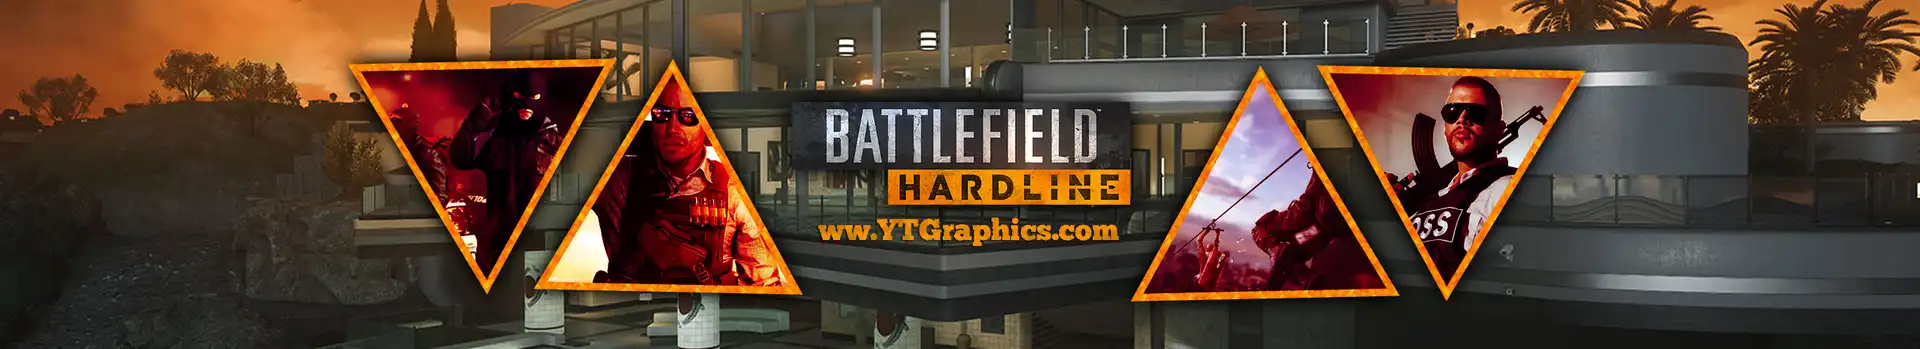 Battlefield: Hardline preview